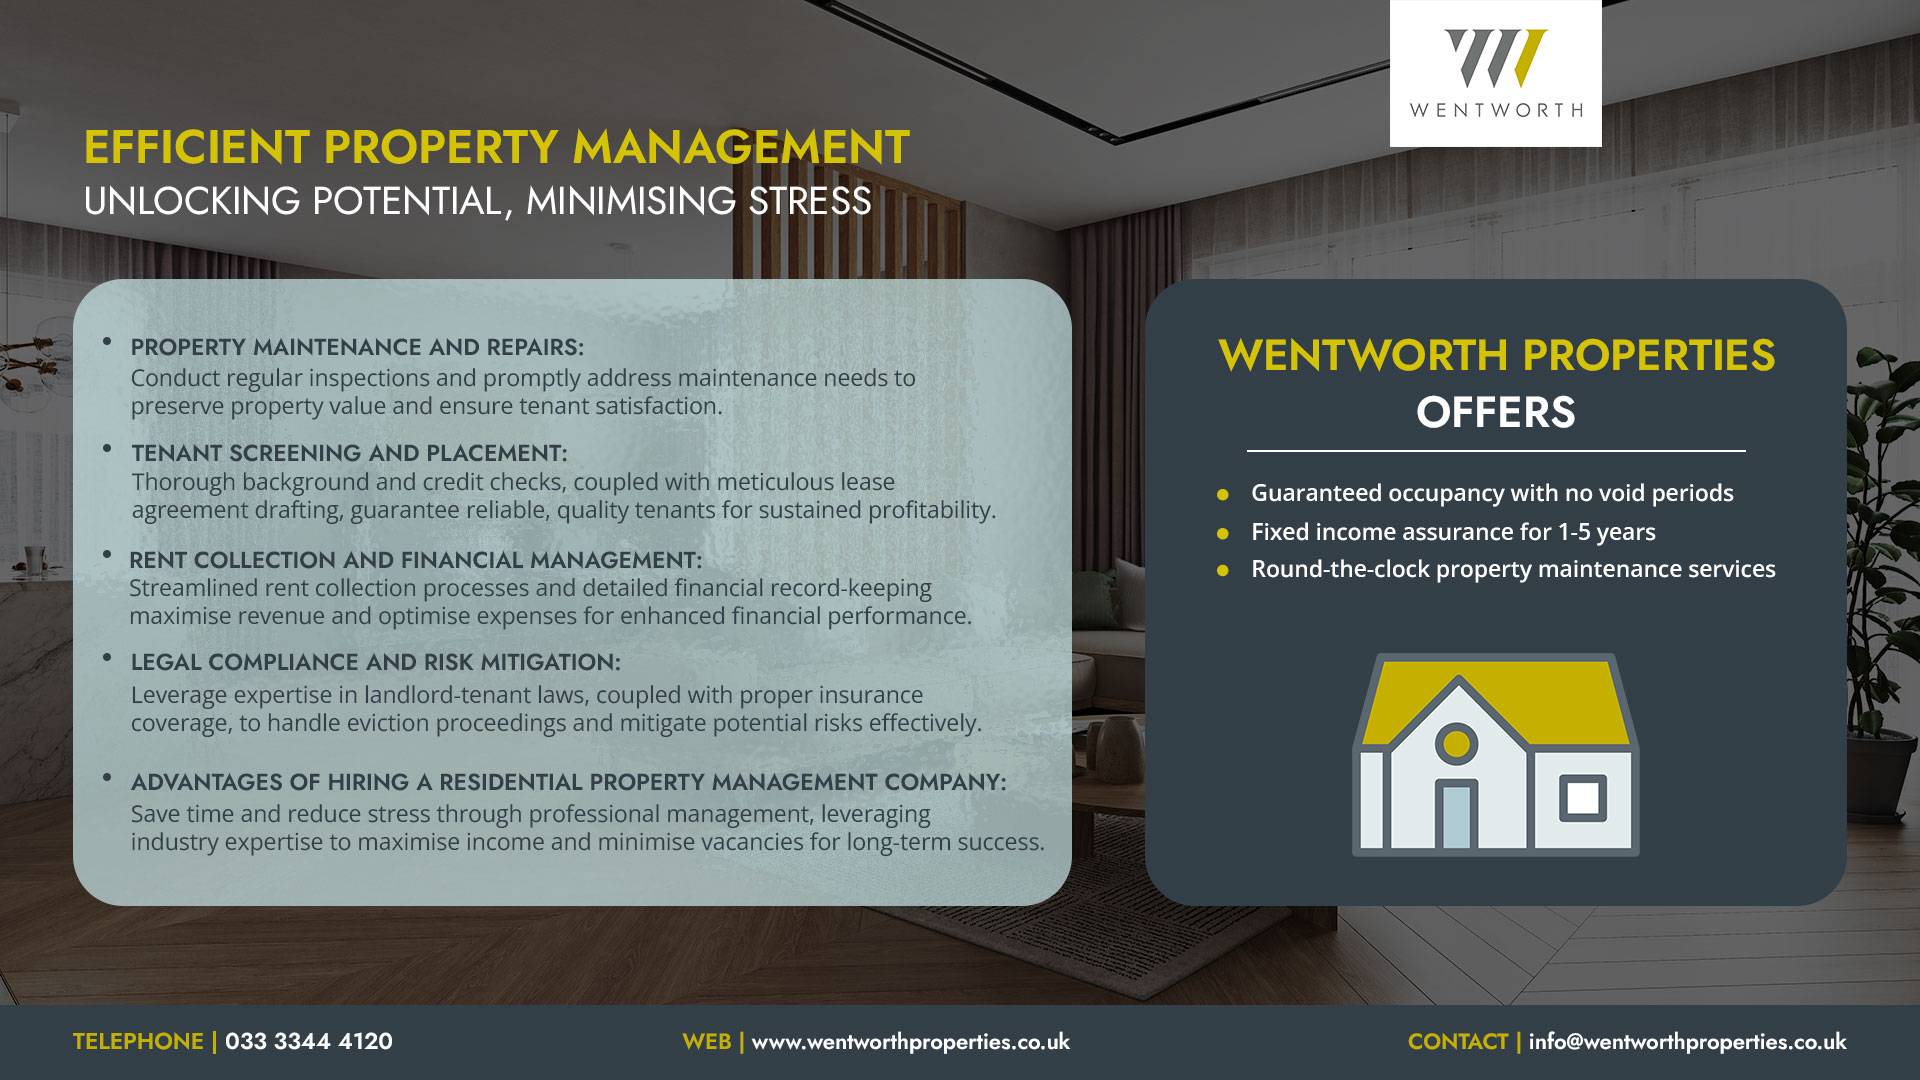 information about efficient property management